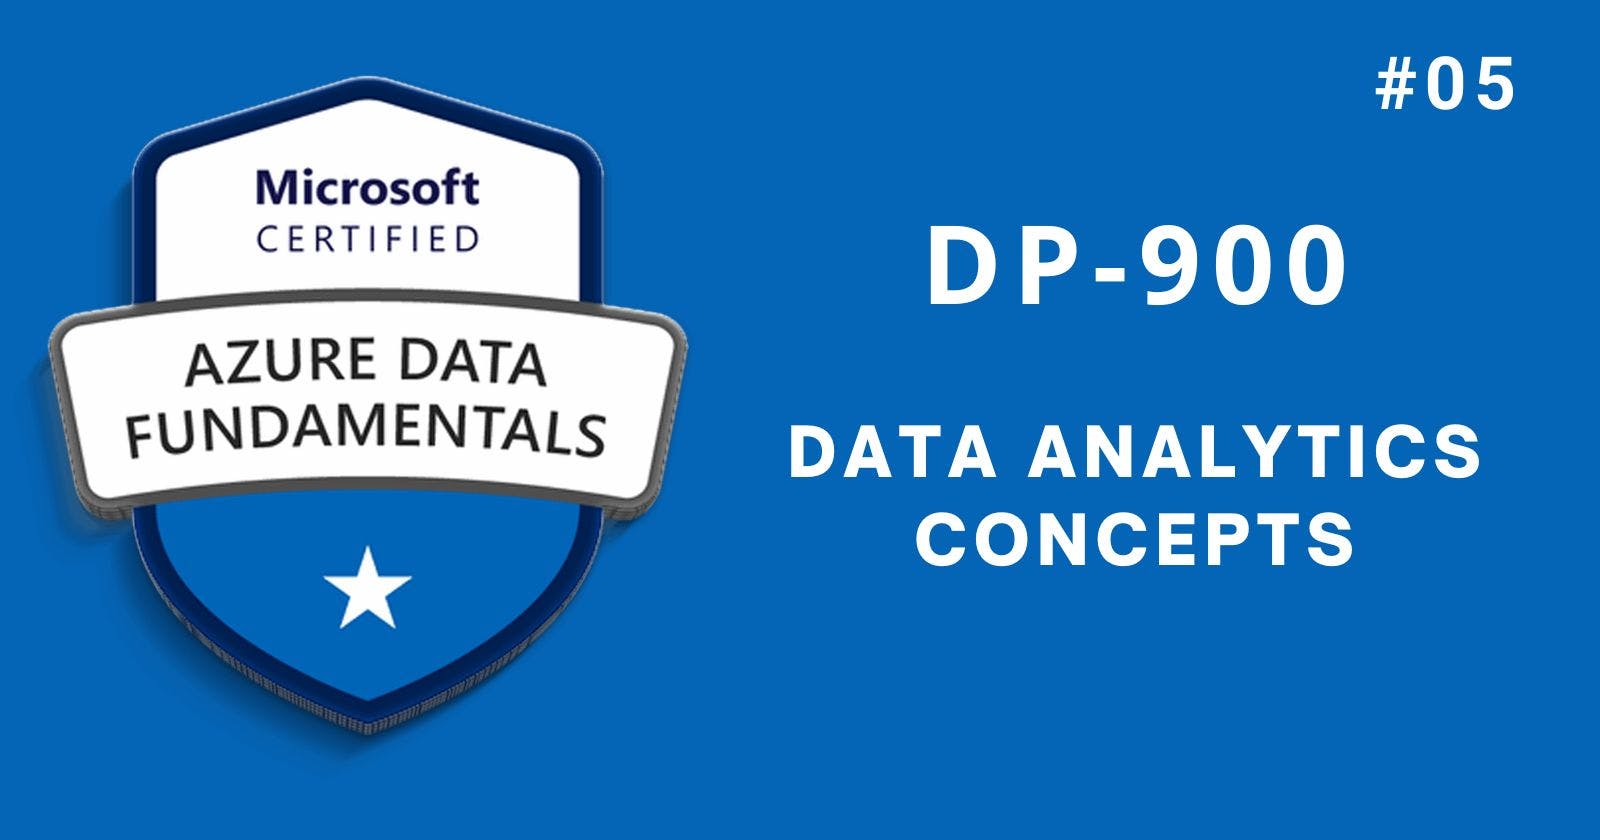 DP 900: Data Analytics Concepts